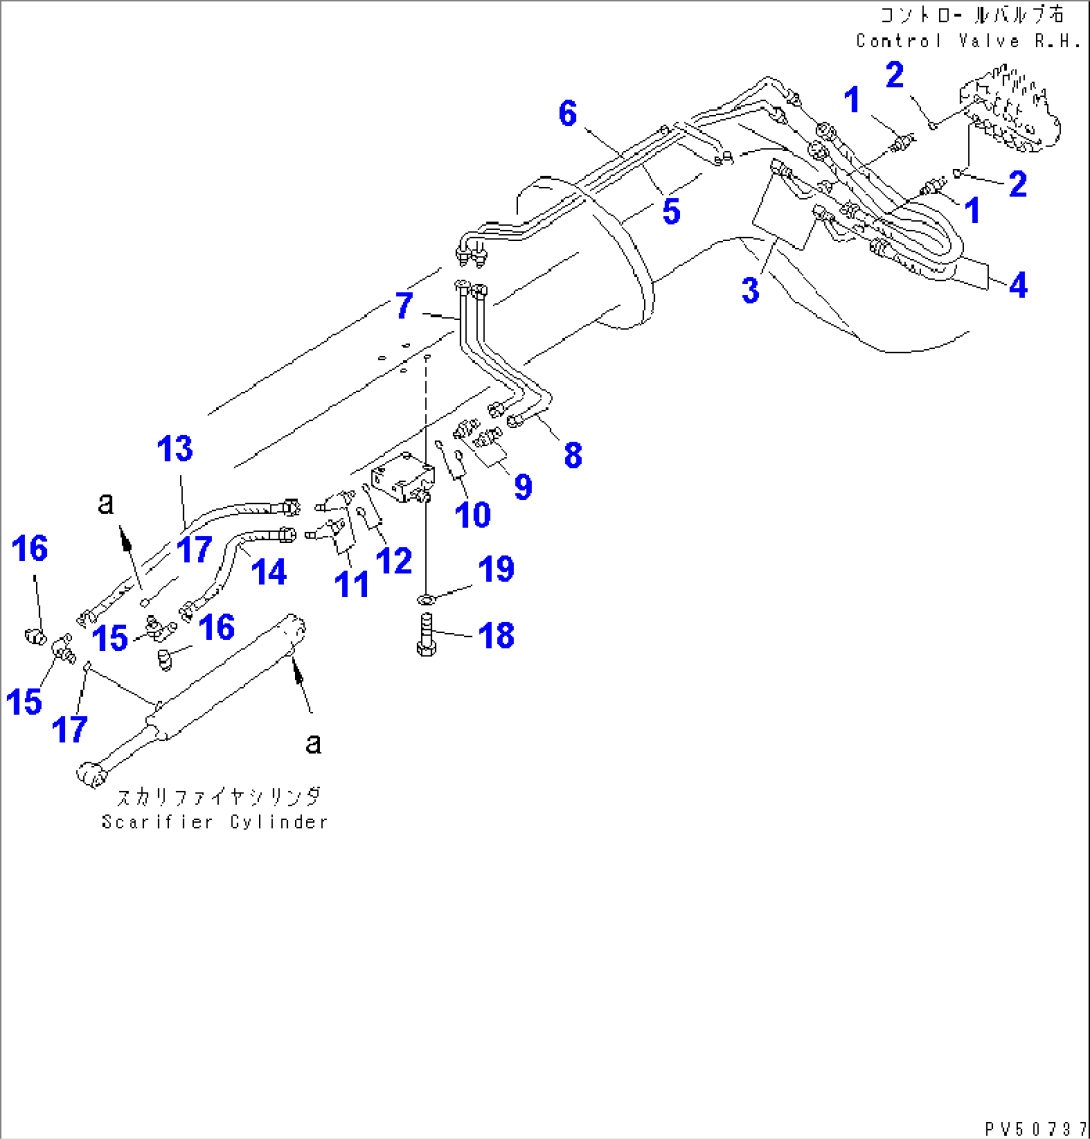 HYDRAULIC PIPING (SCARIFIER CYLINDER LINE) (2/2)(#10001-10190)